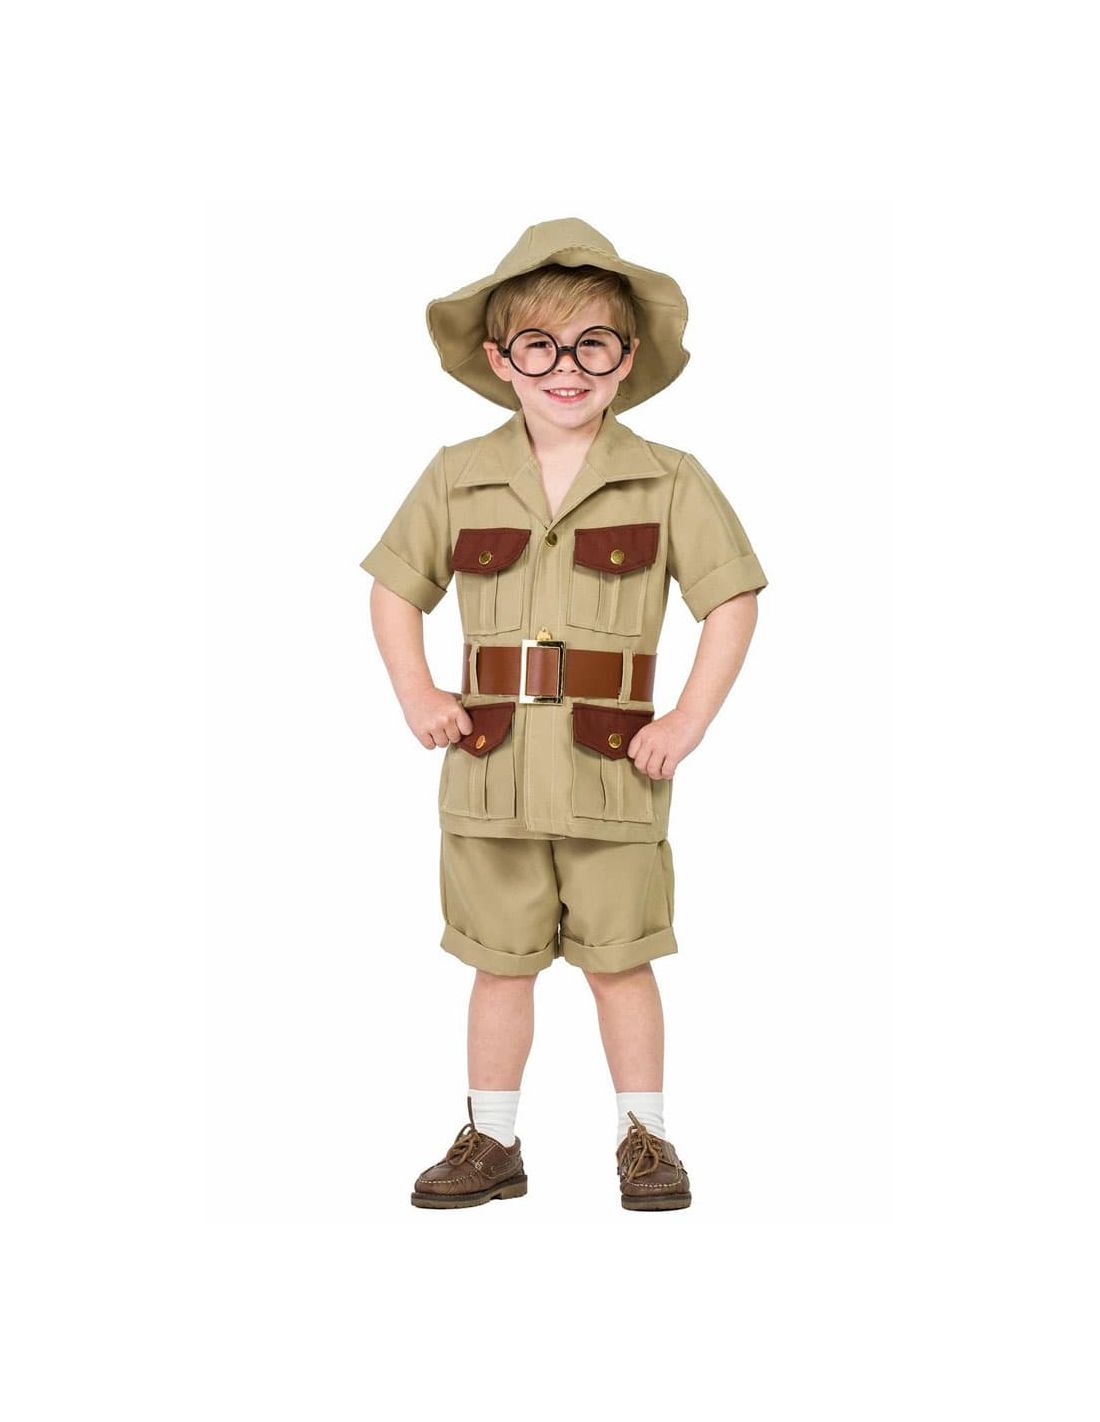 Comprar Disfraz de Explorador Infantil - Disfraces Exploradores